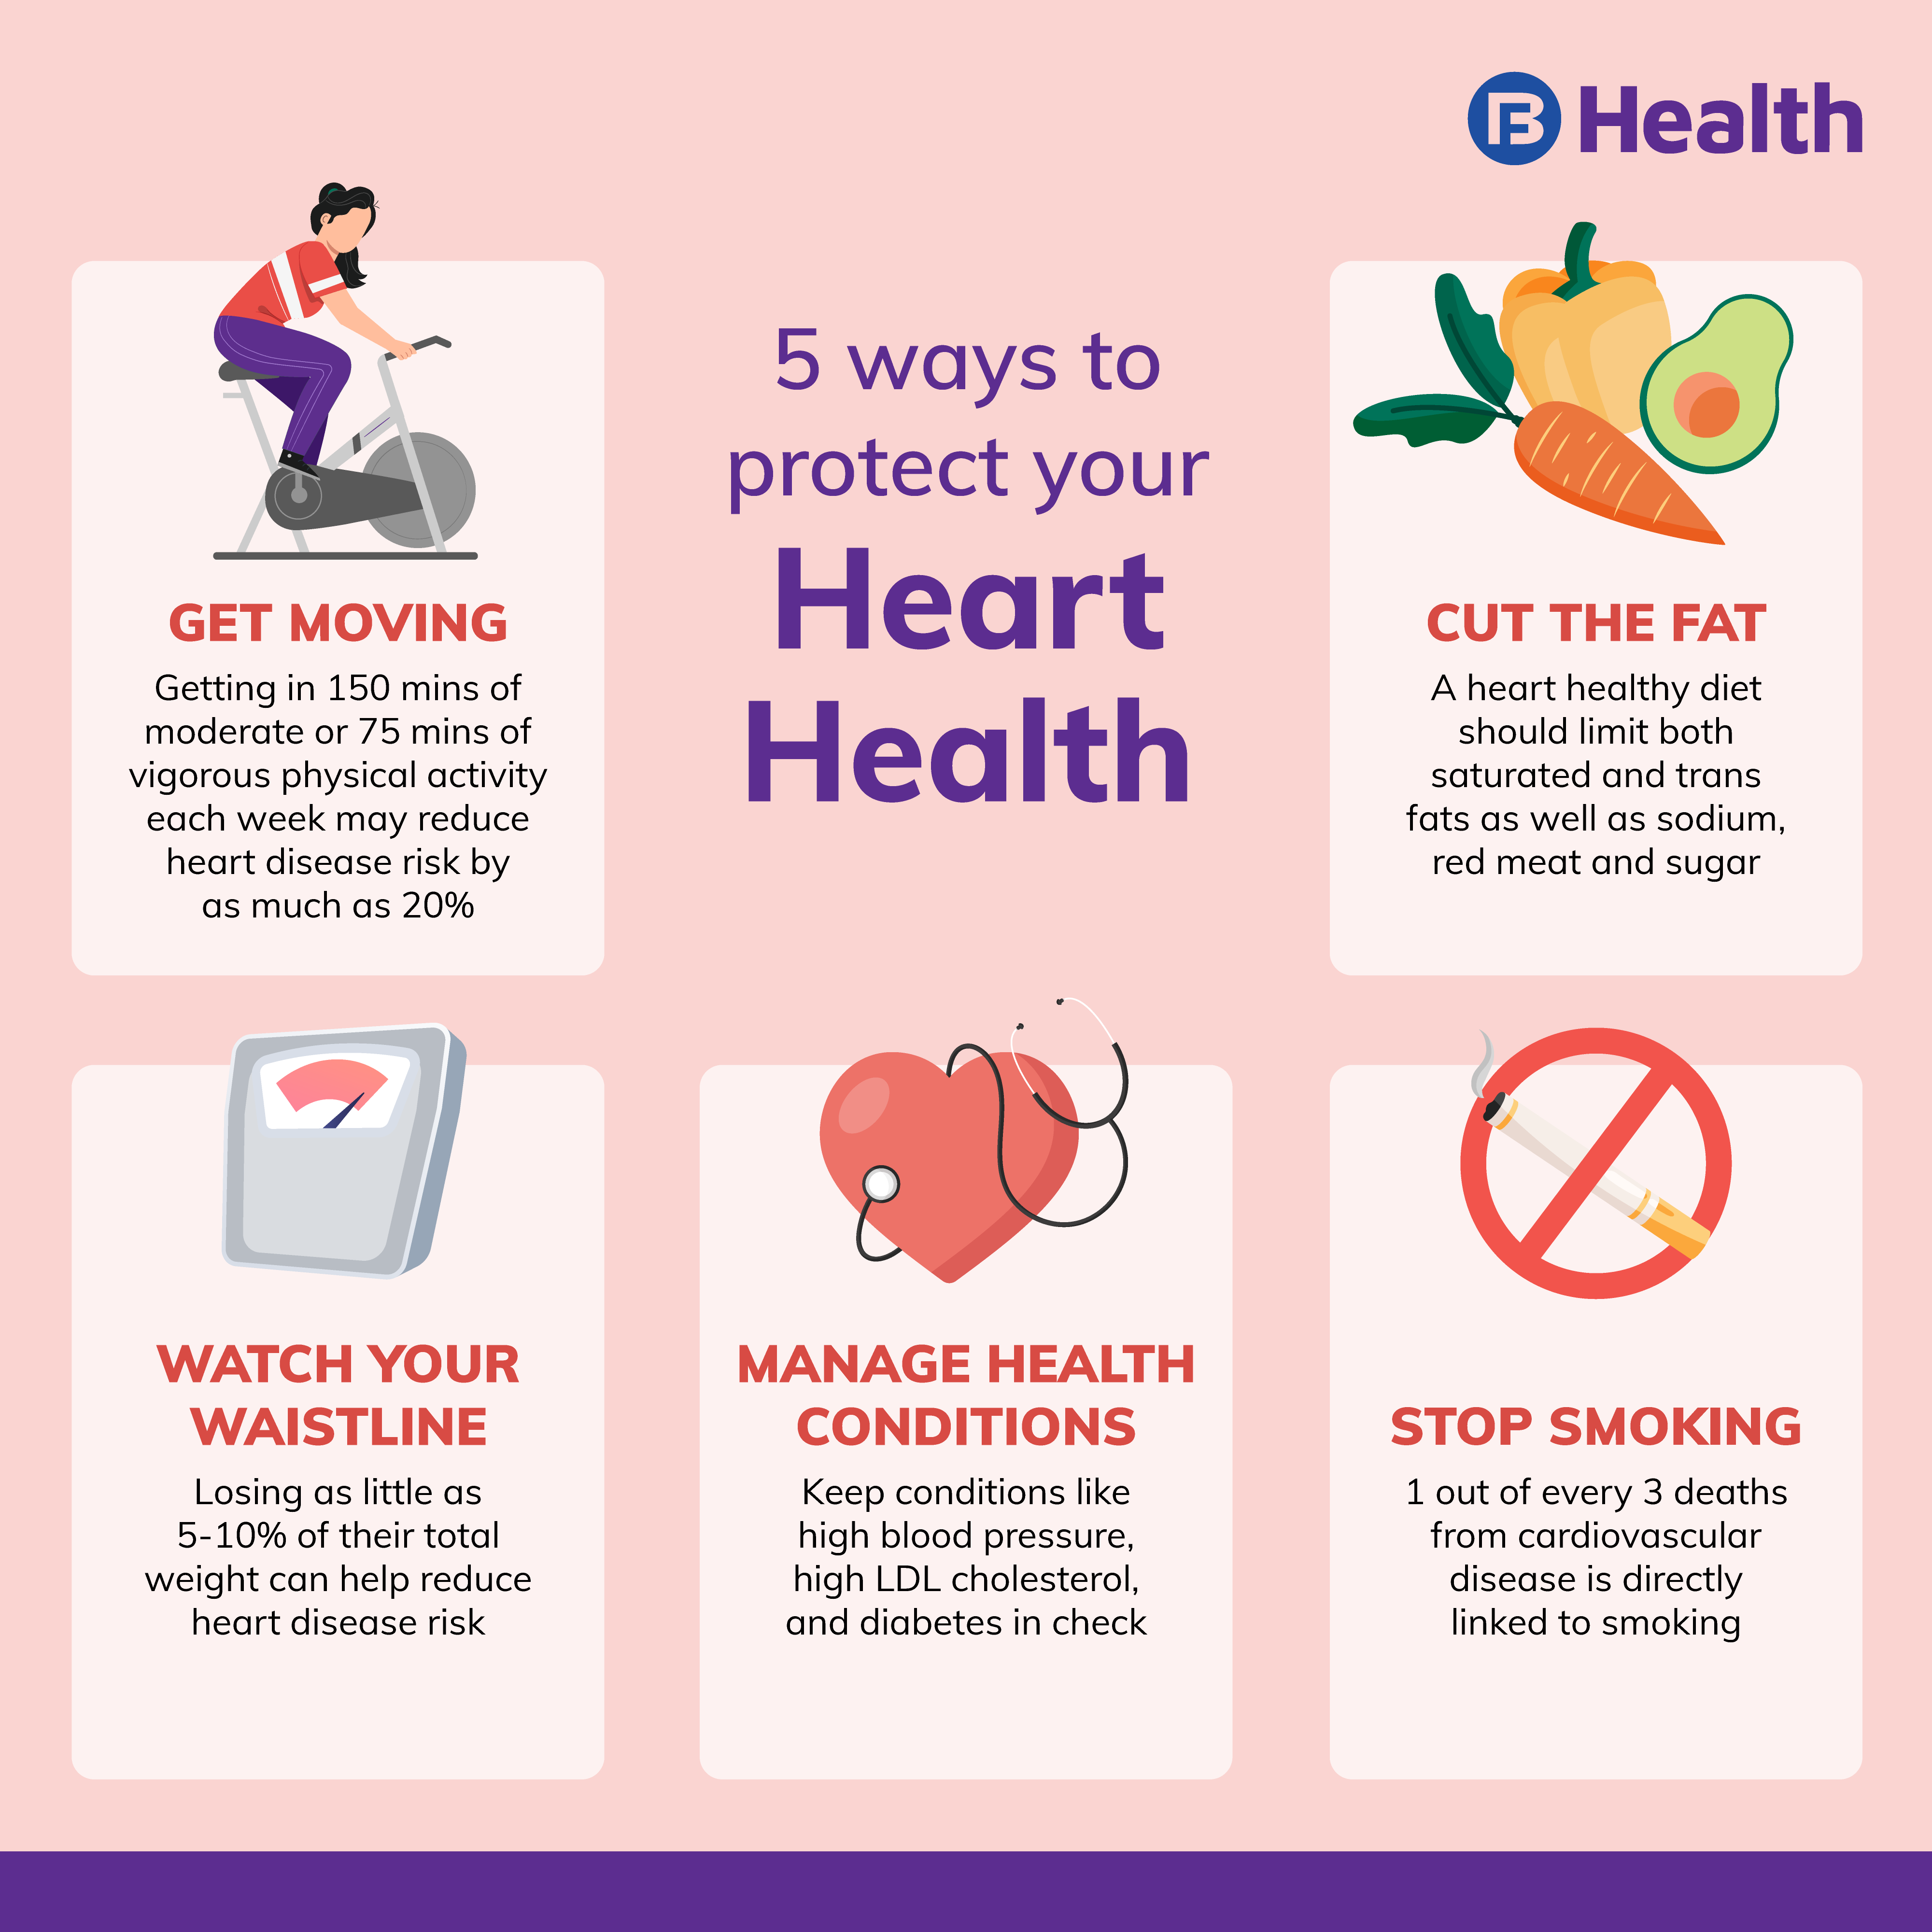 Heart health exercises